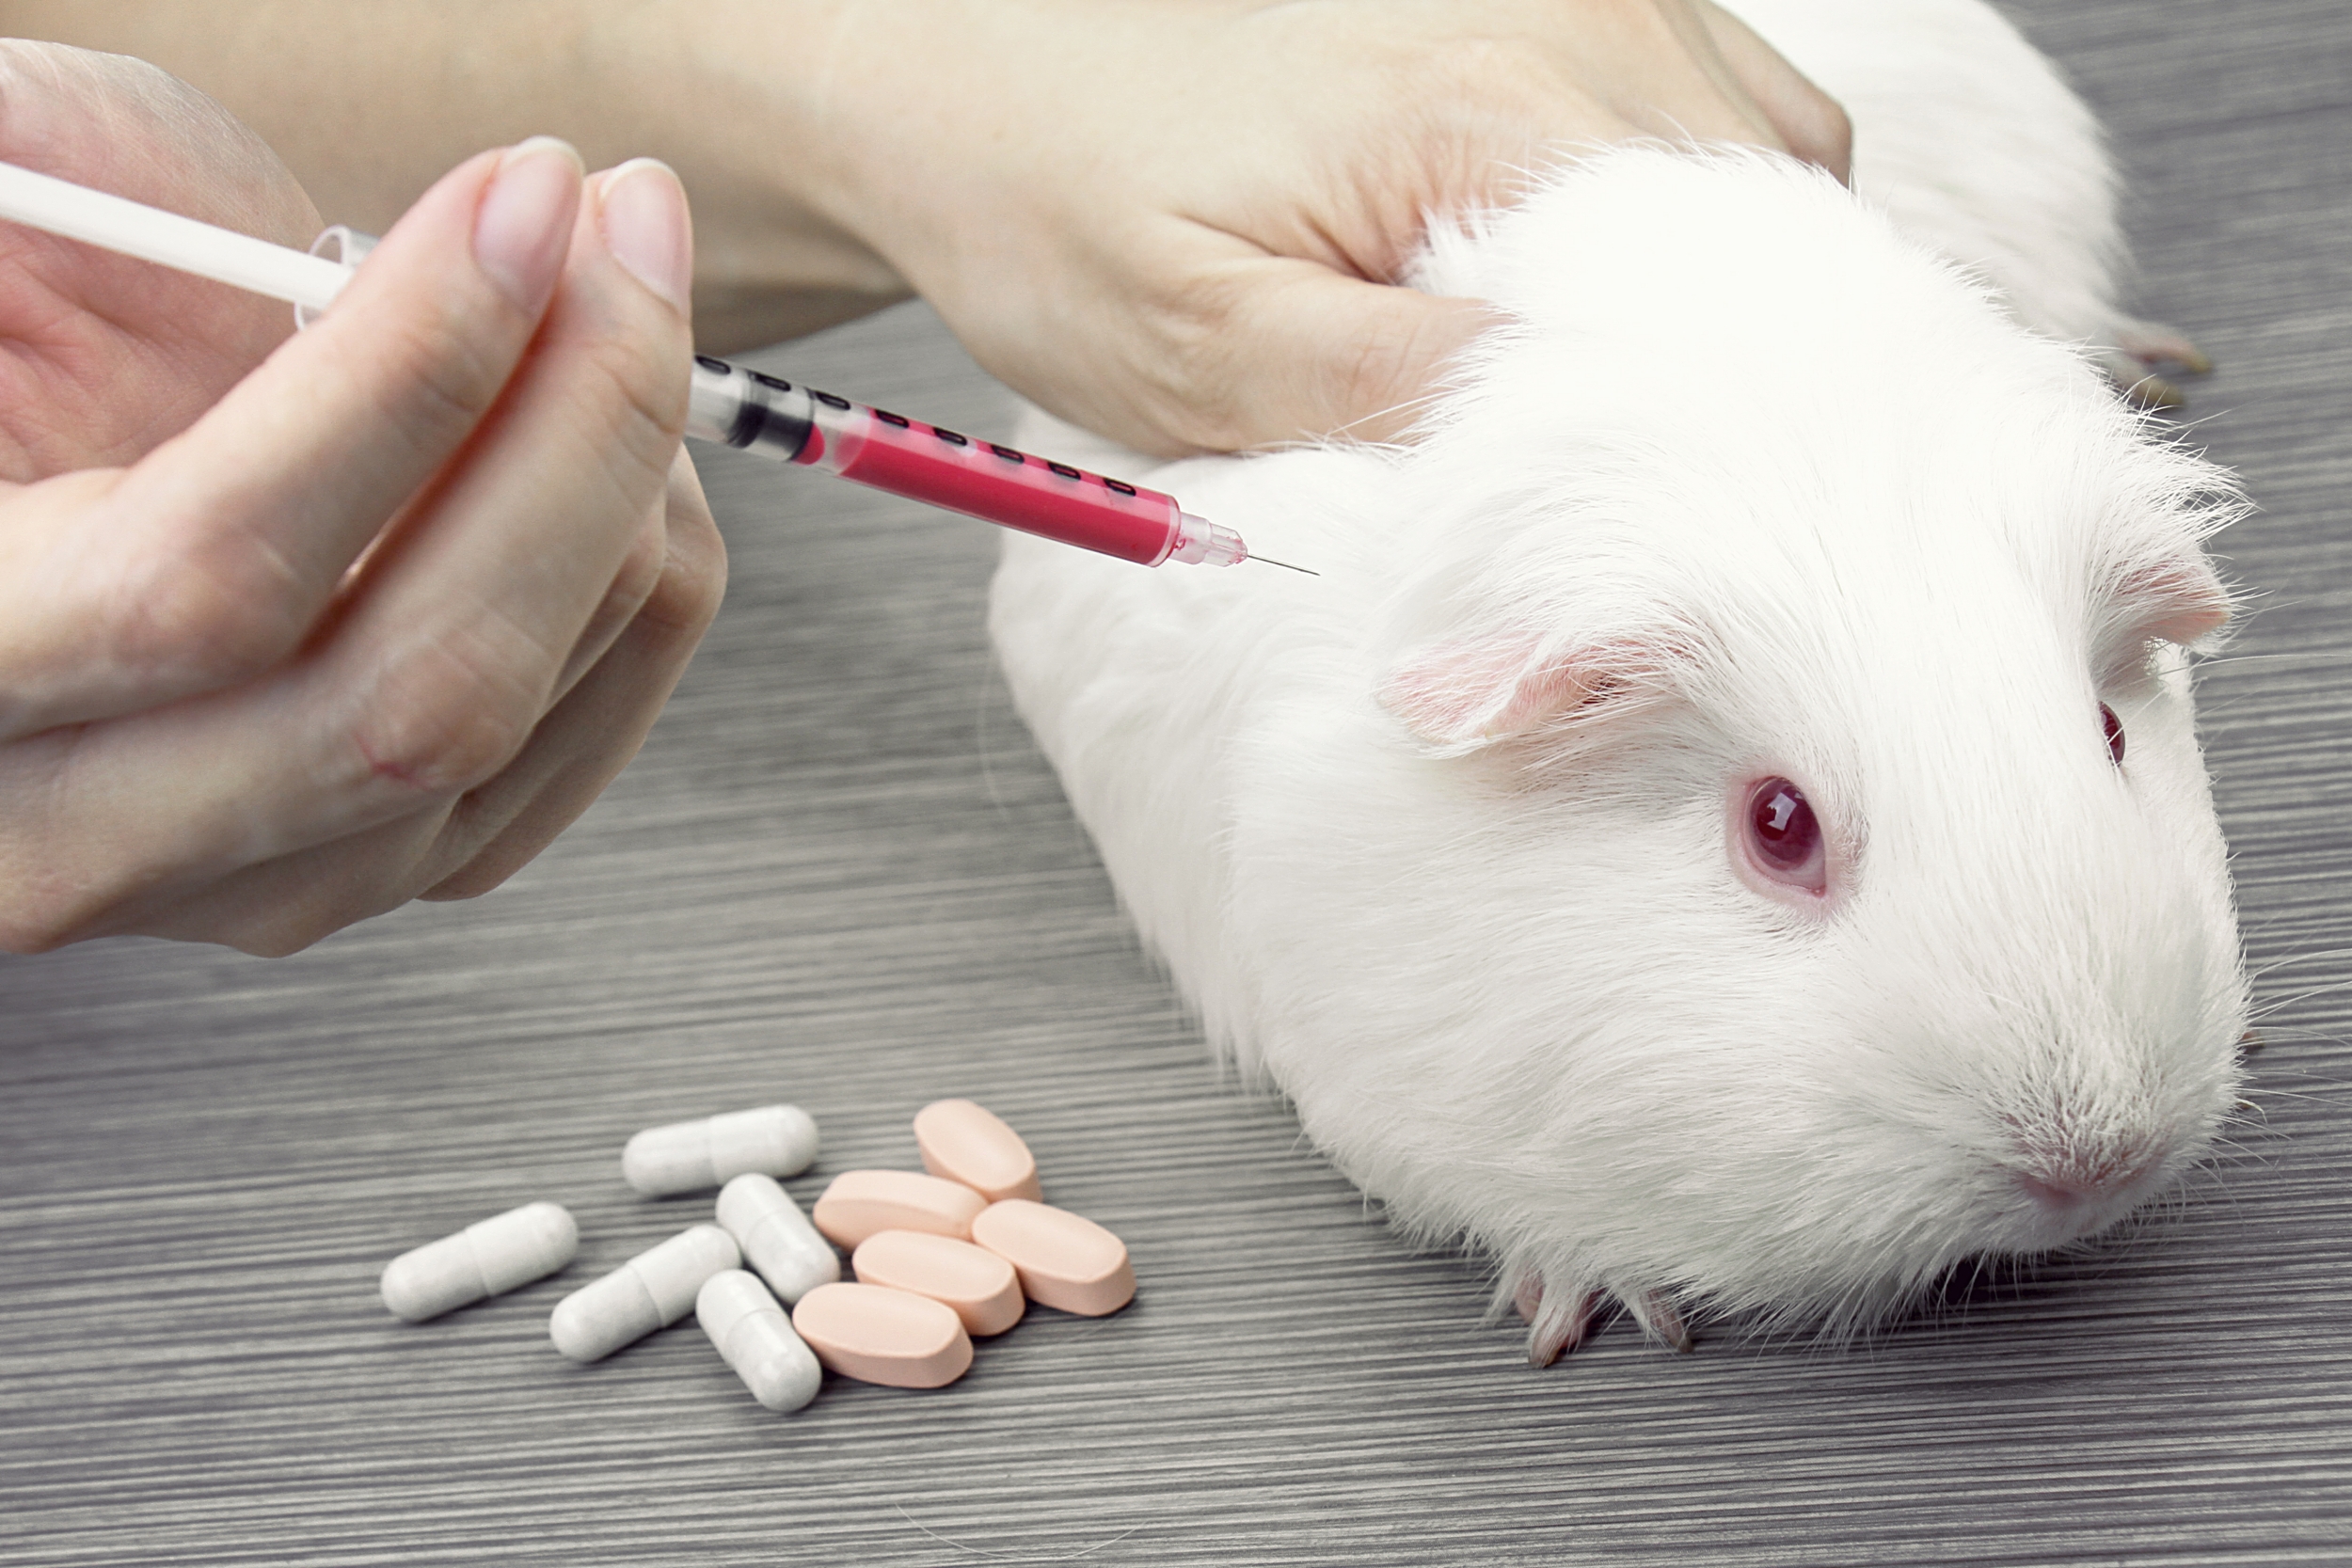 animal testing issue essay